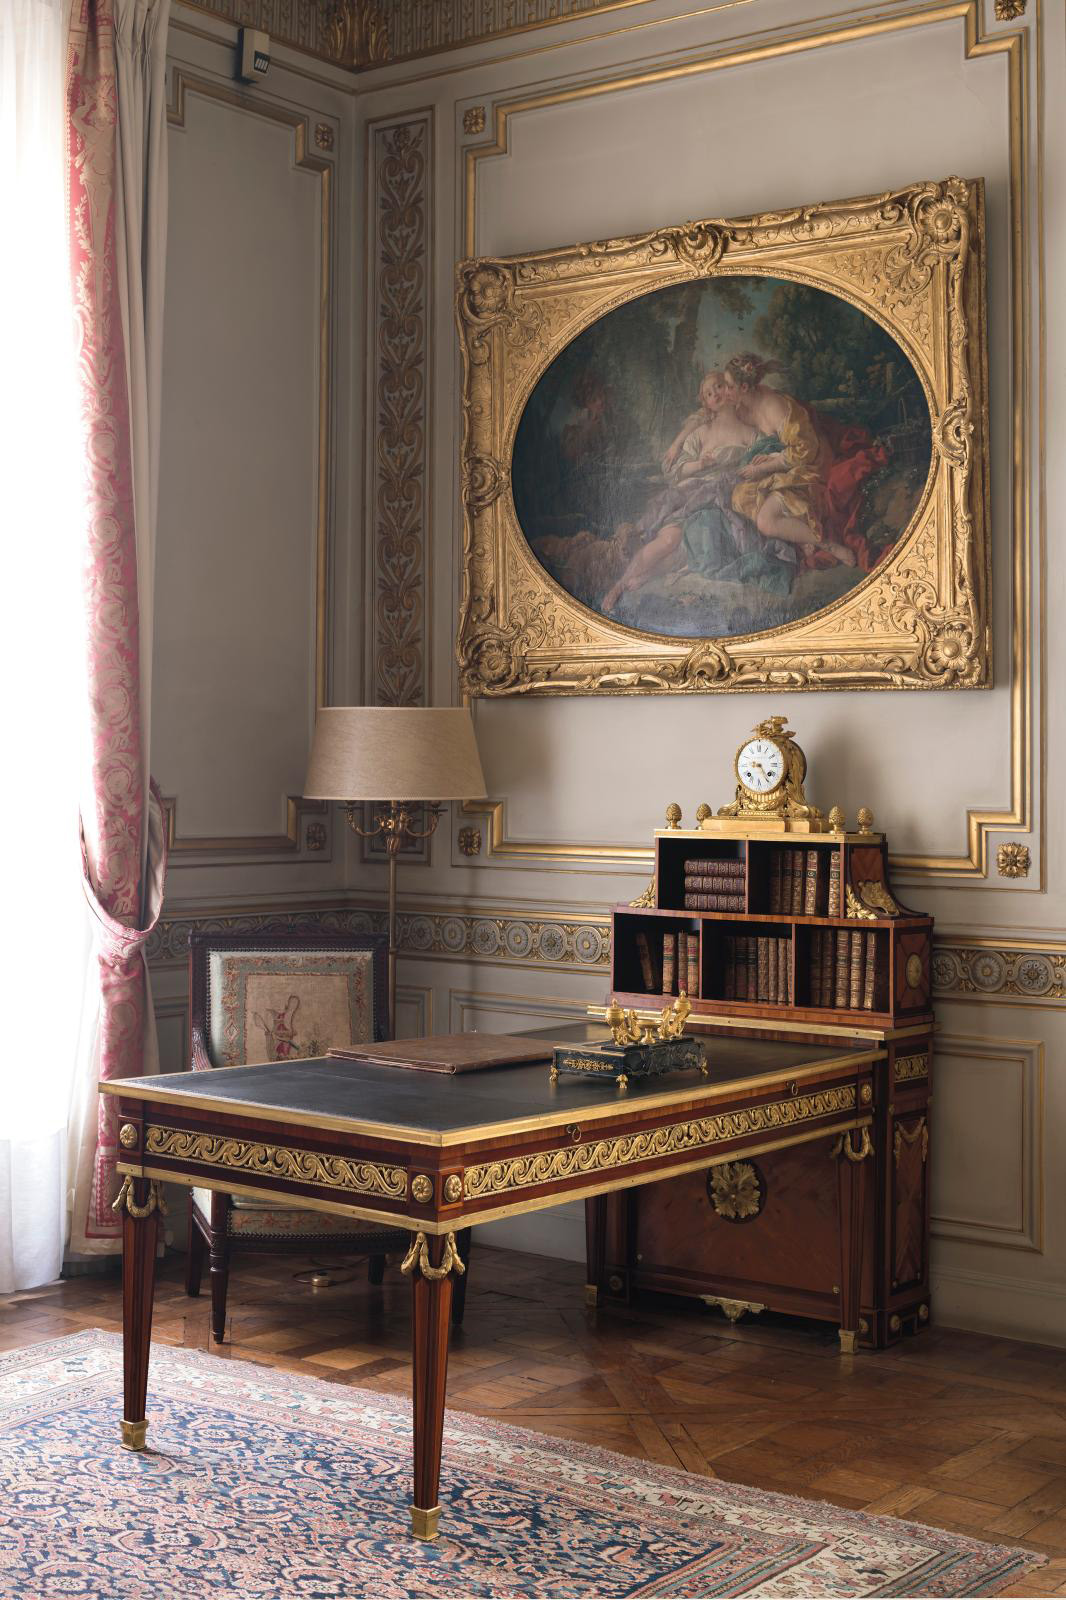 The Hidden Treasures of the Banque de France